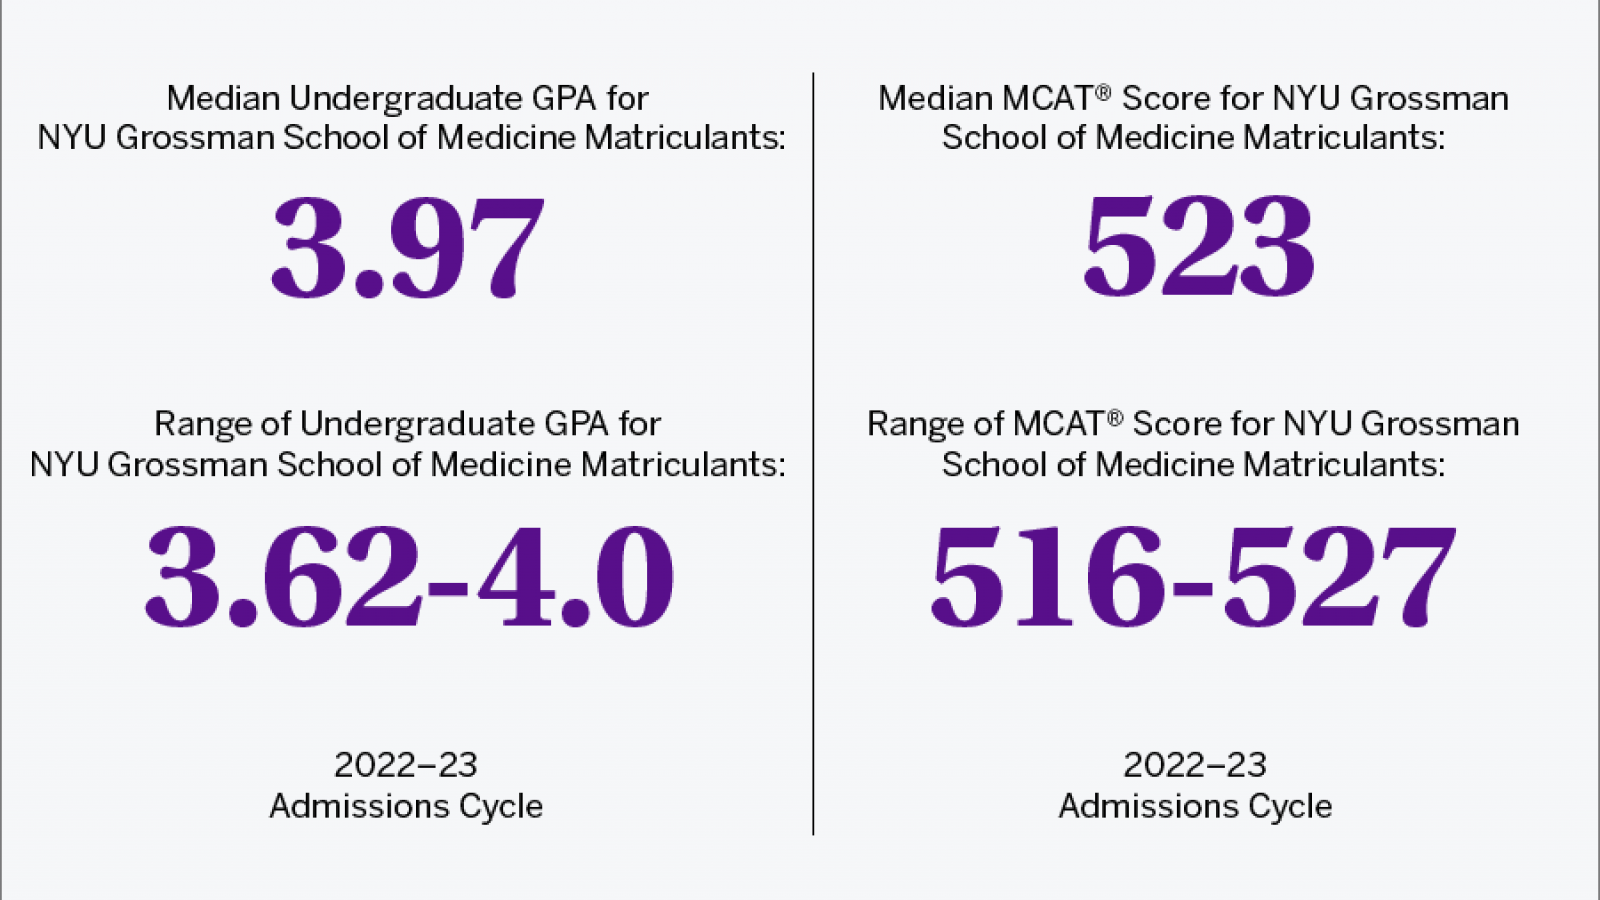 Range and Average Undergraduate GPA of Accepted Students